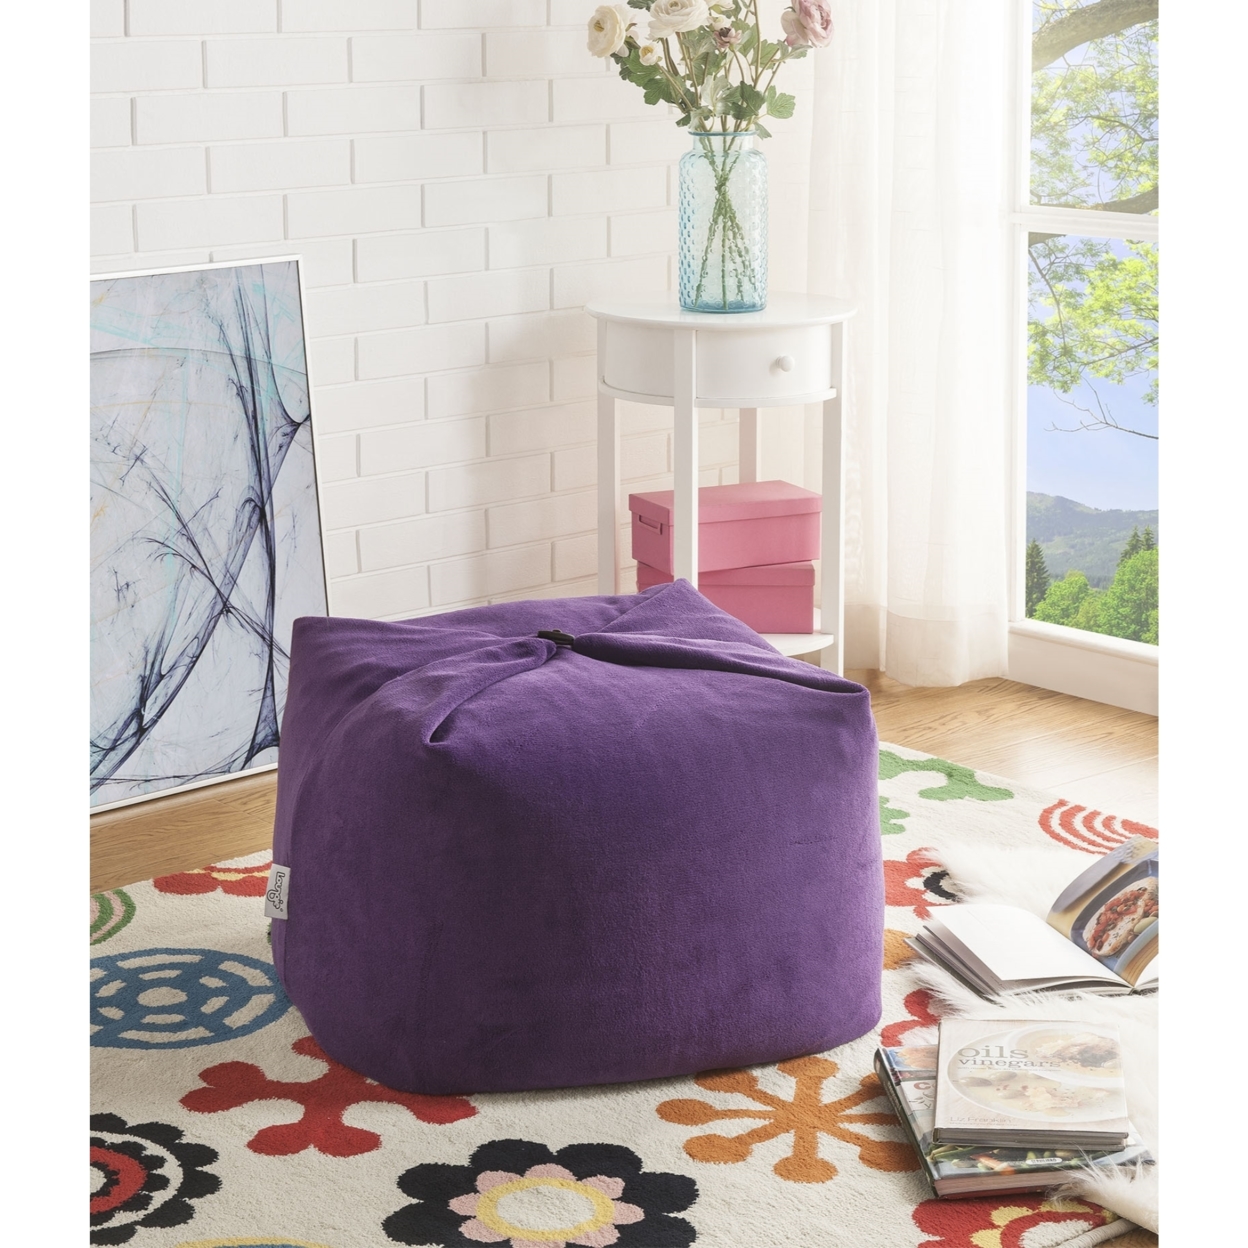 Loungie? Magic Pouf Beanbag-Microplush Fabric-3-in-1 Convertible Ottoman + Chair + Floor Pillow-Modern & Functional - Blue